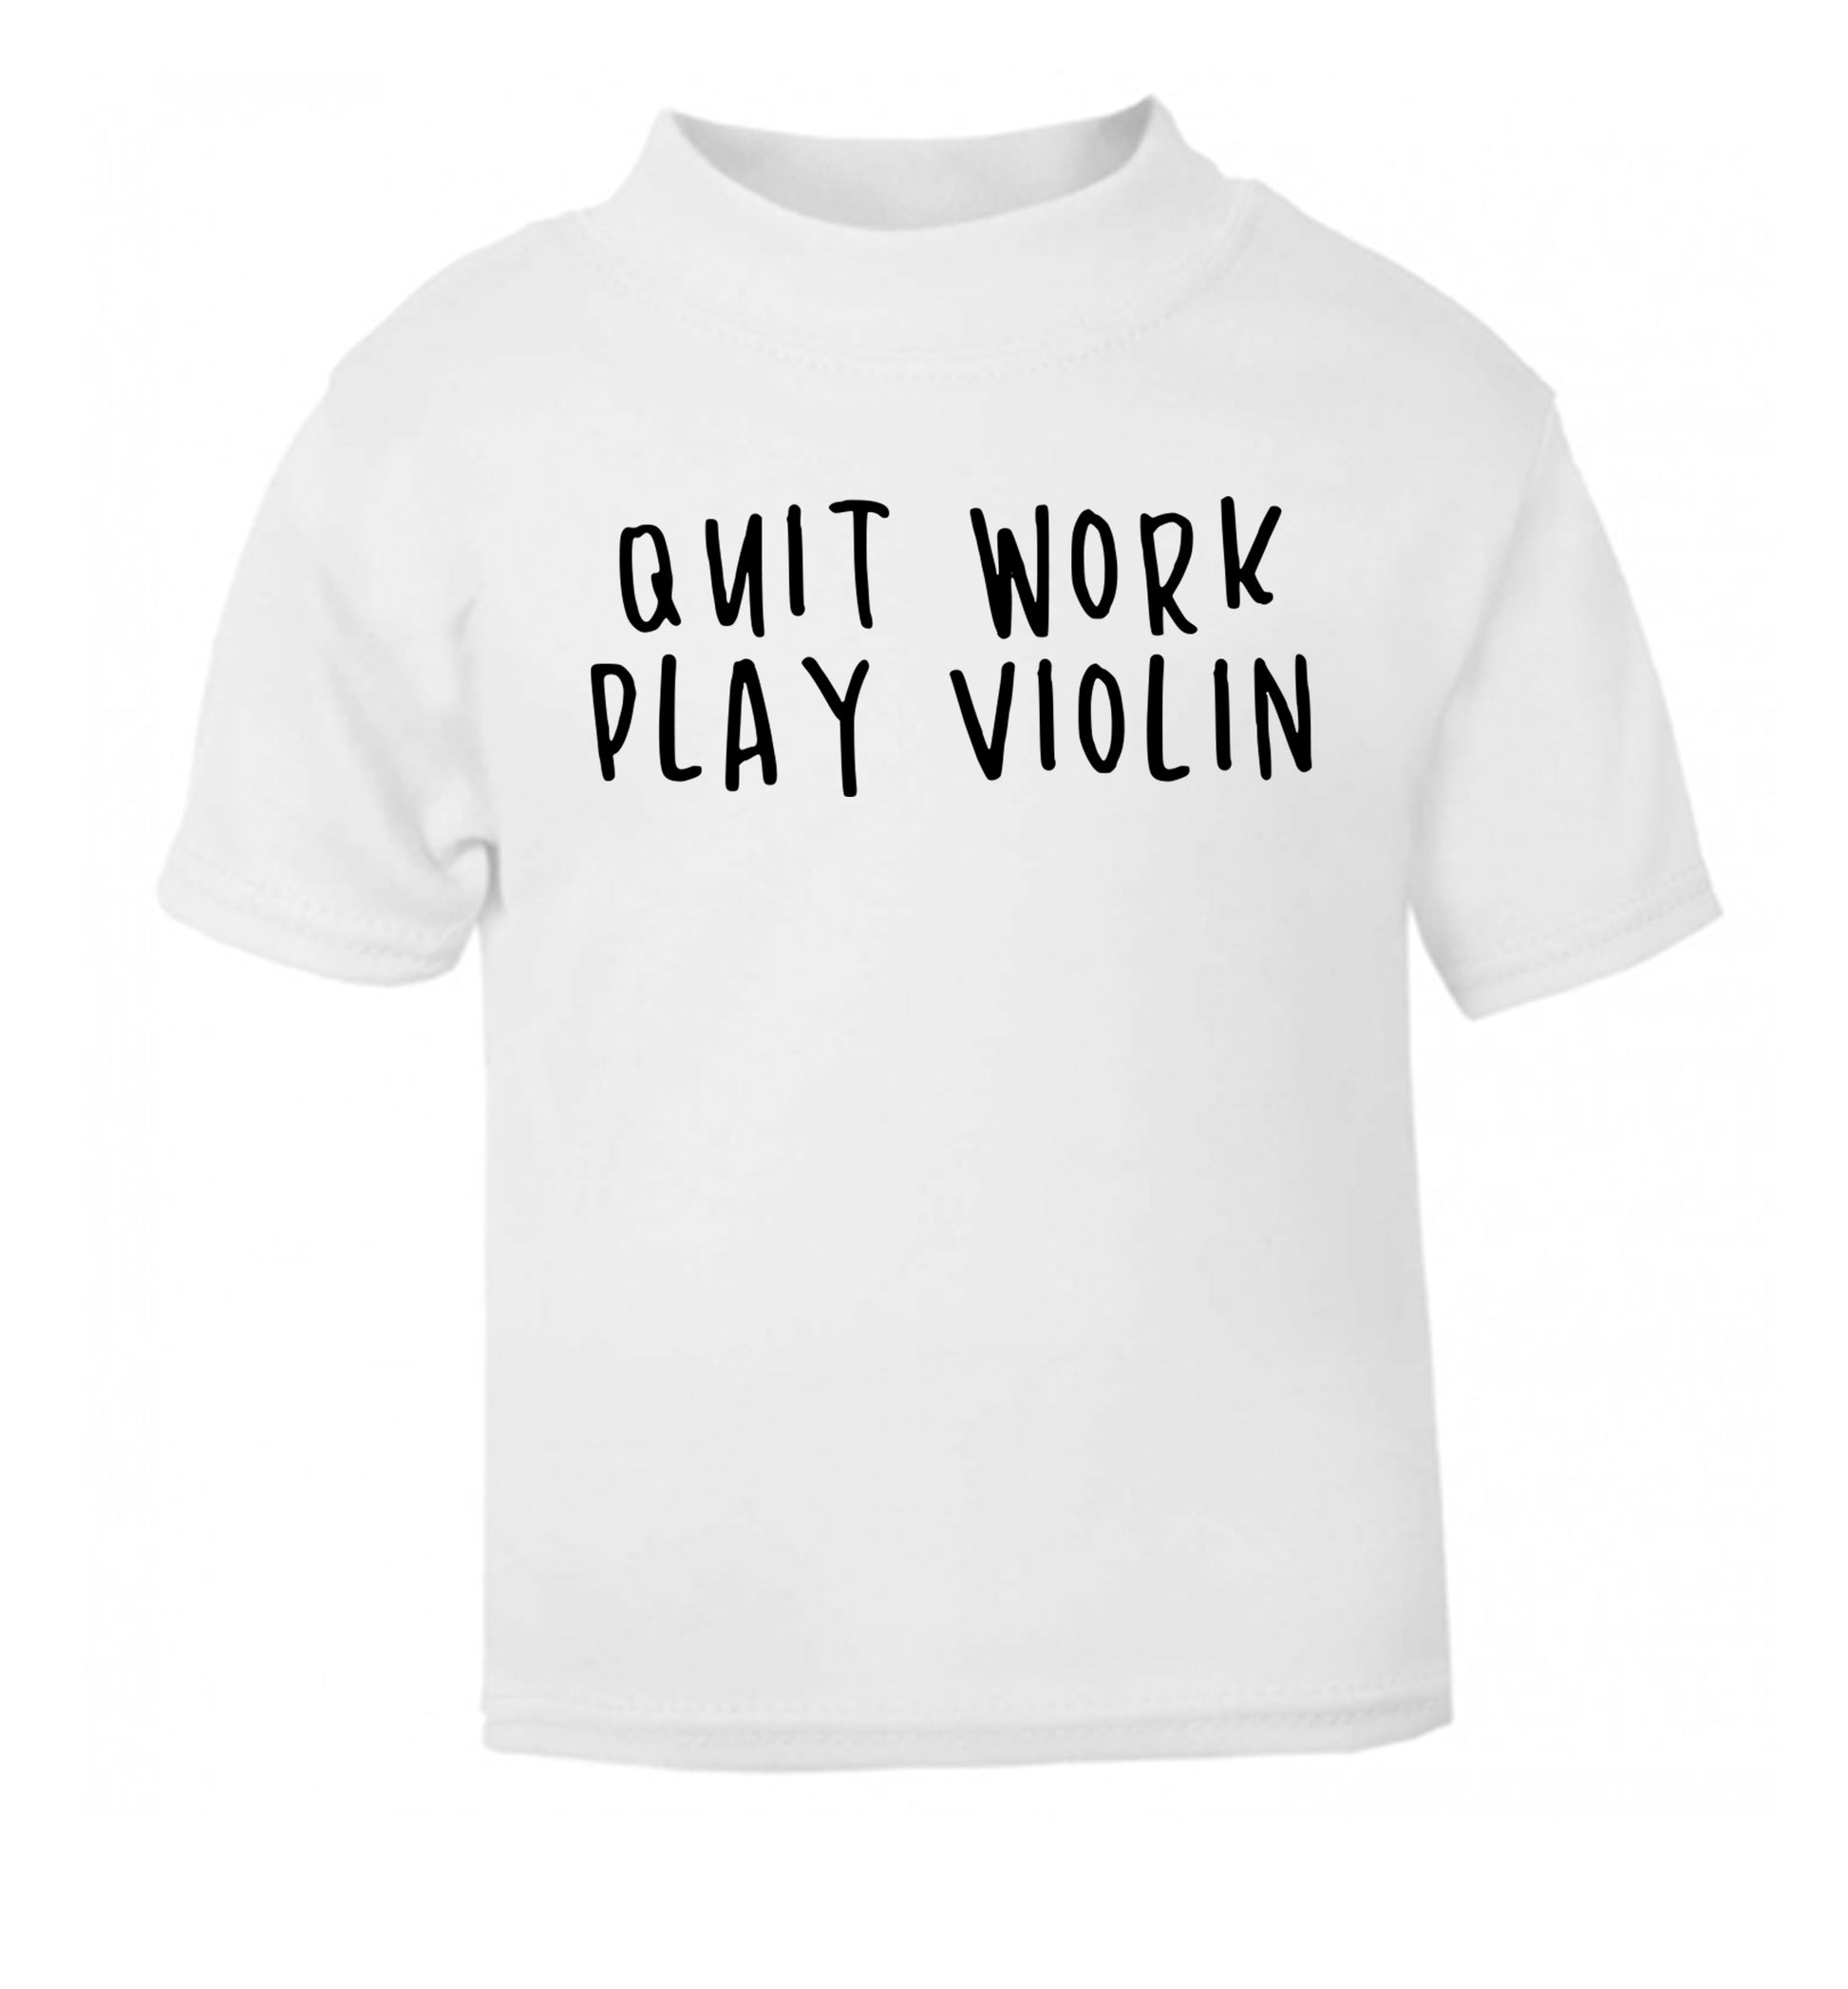 Quit work play violin white Baby Toddler Tshirt 2 Years